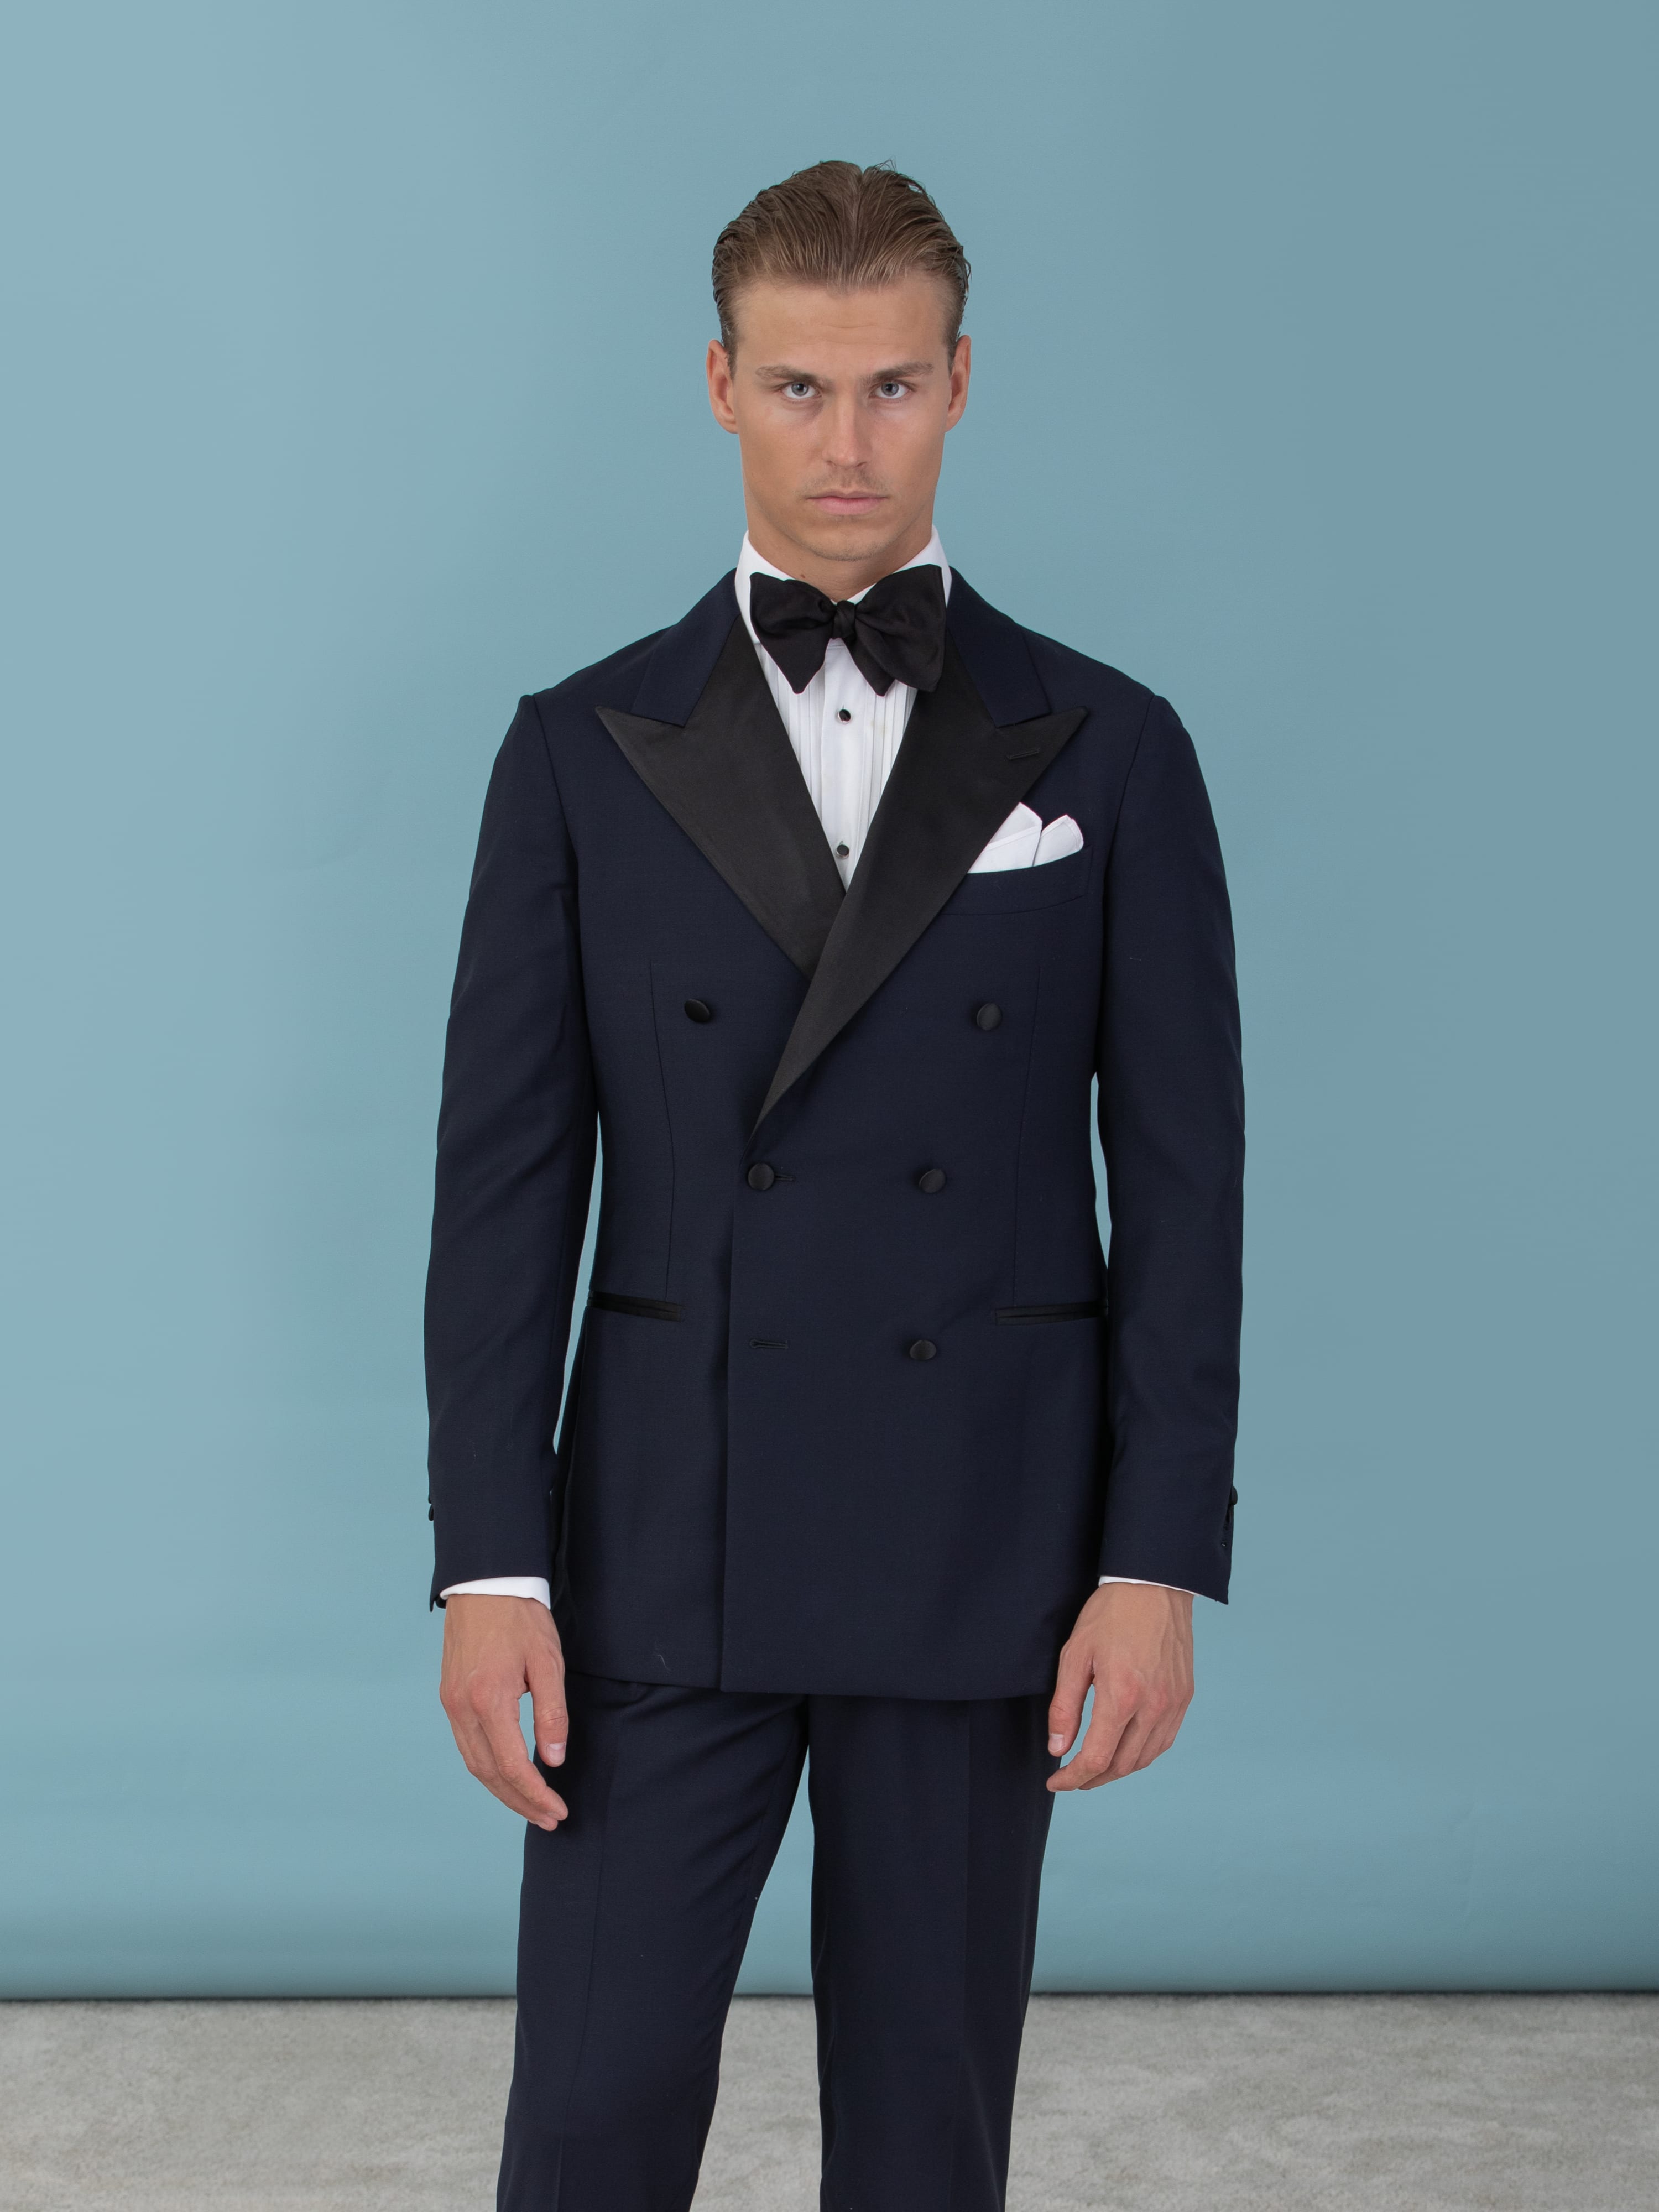 Midnight Blue S130 Tuxedo Suit - Grand Le Mar